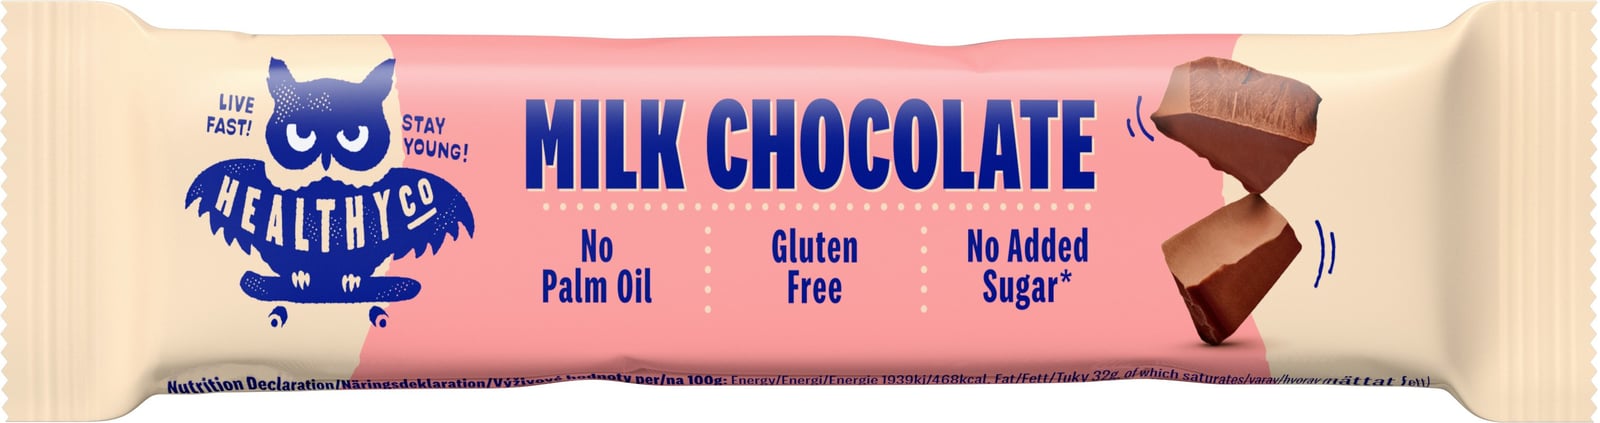 HealthyCo Milk Chocolate Bar 30g